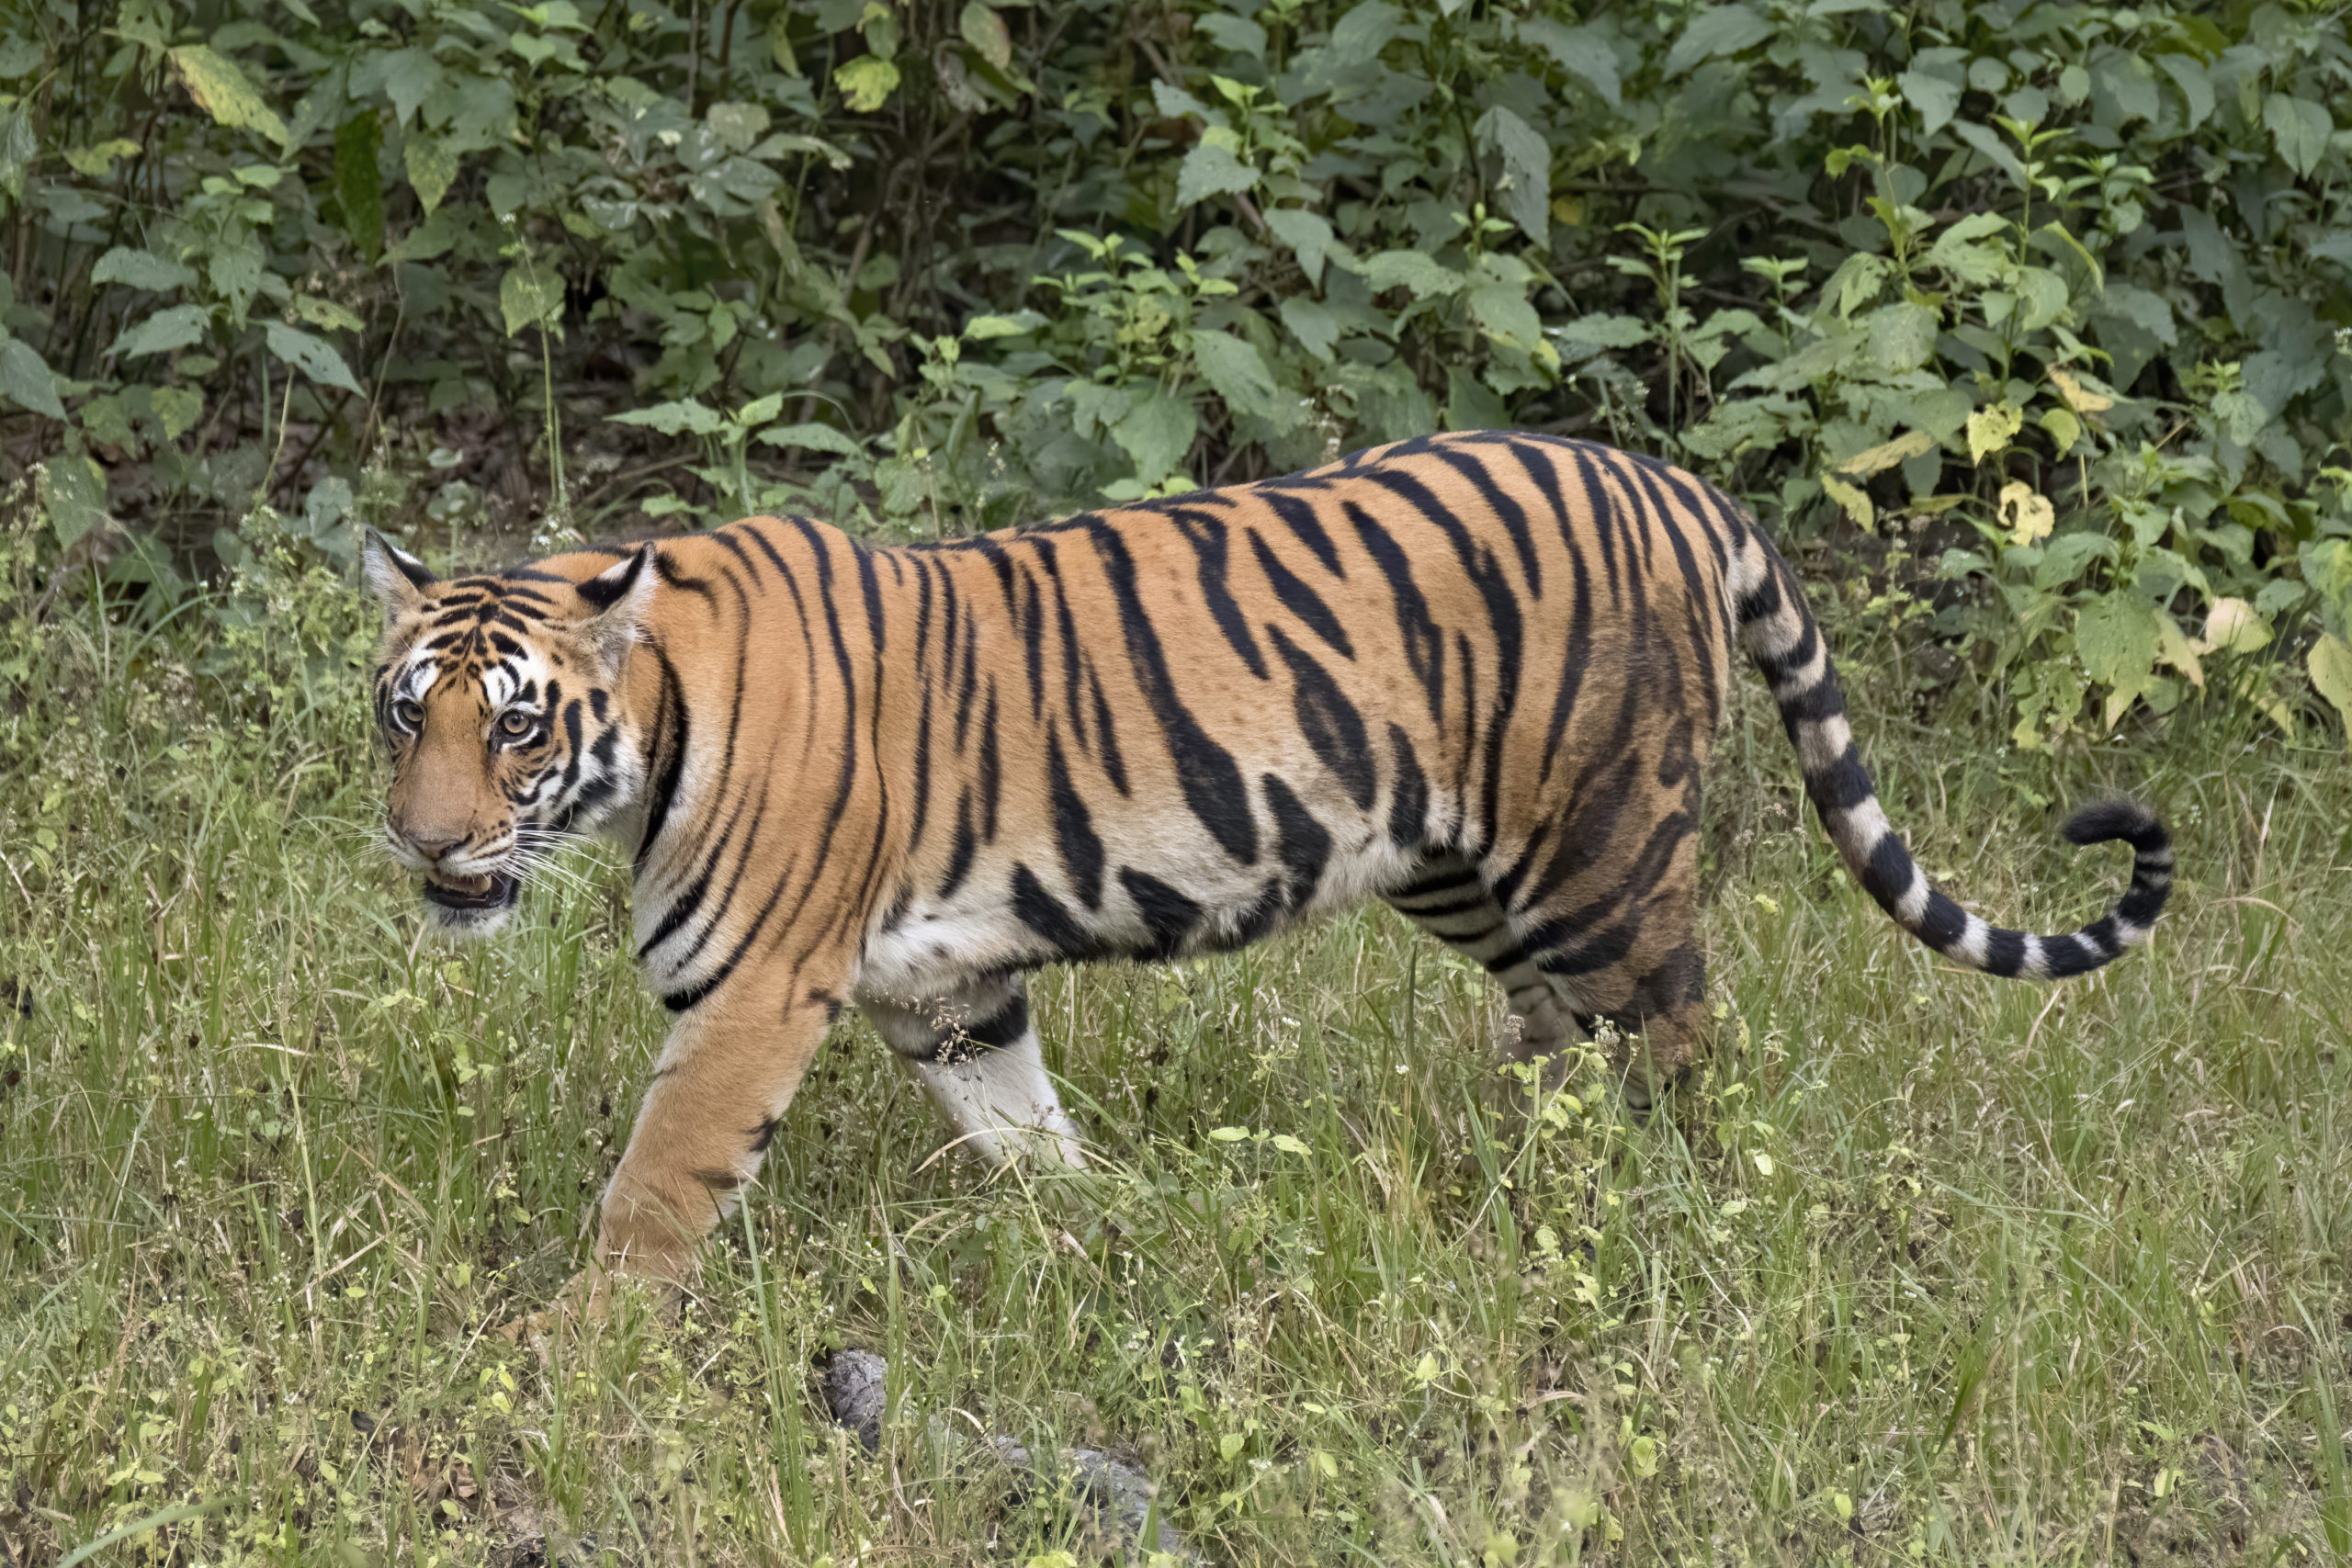 Tiger kills 40-yr-old man in Bardiya